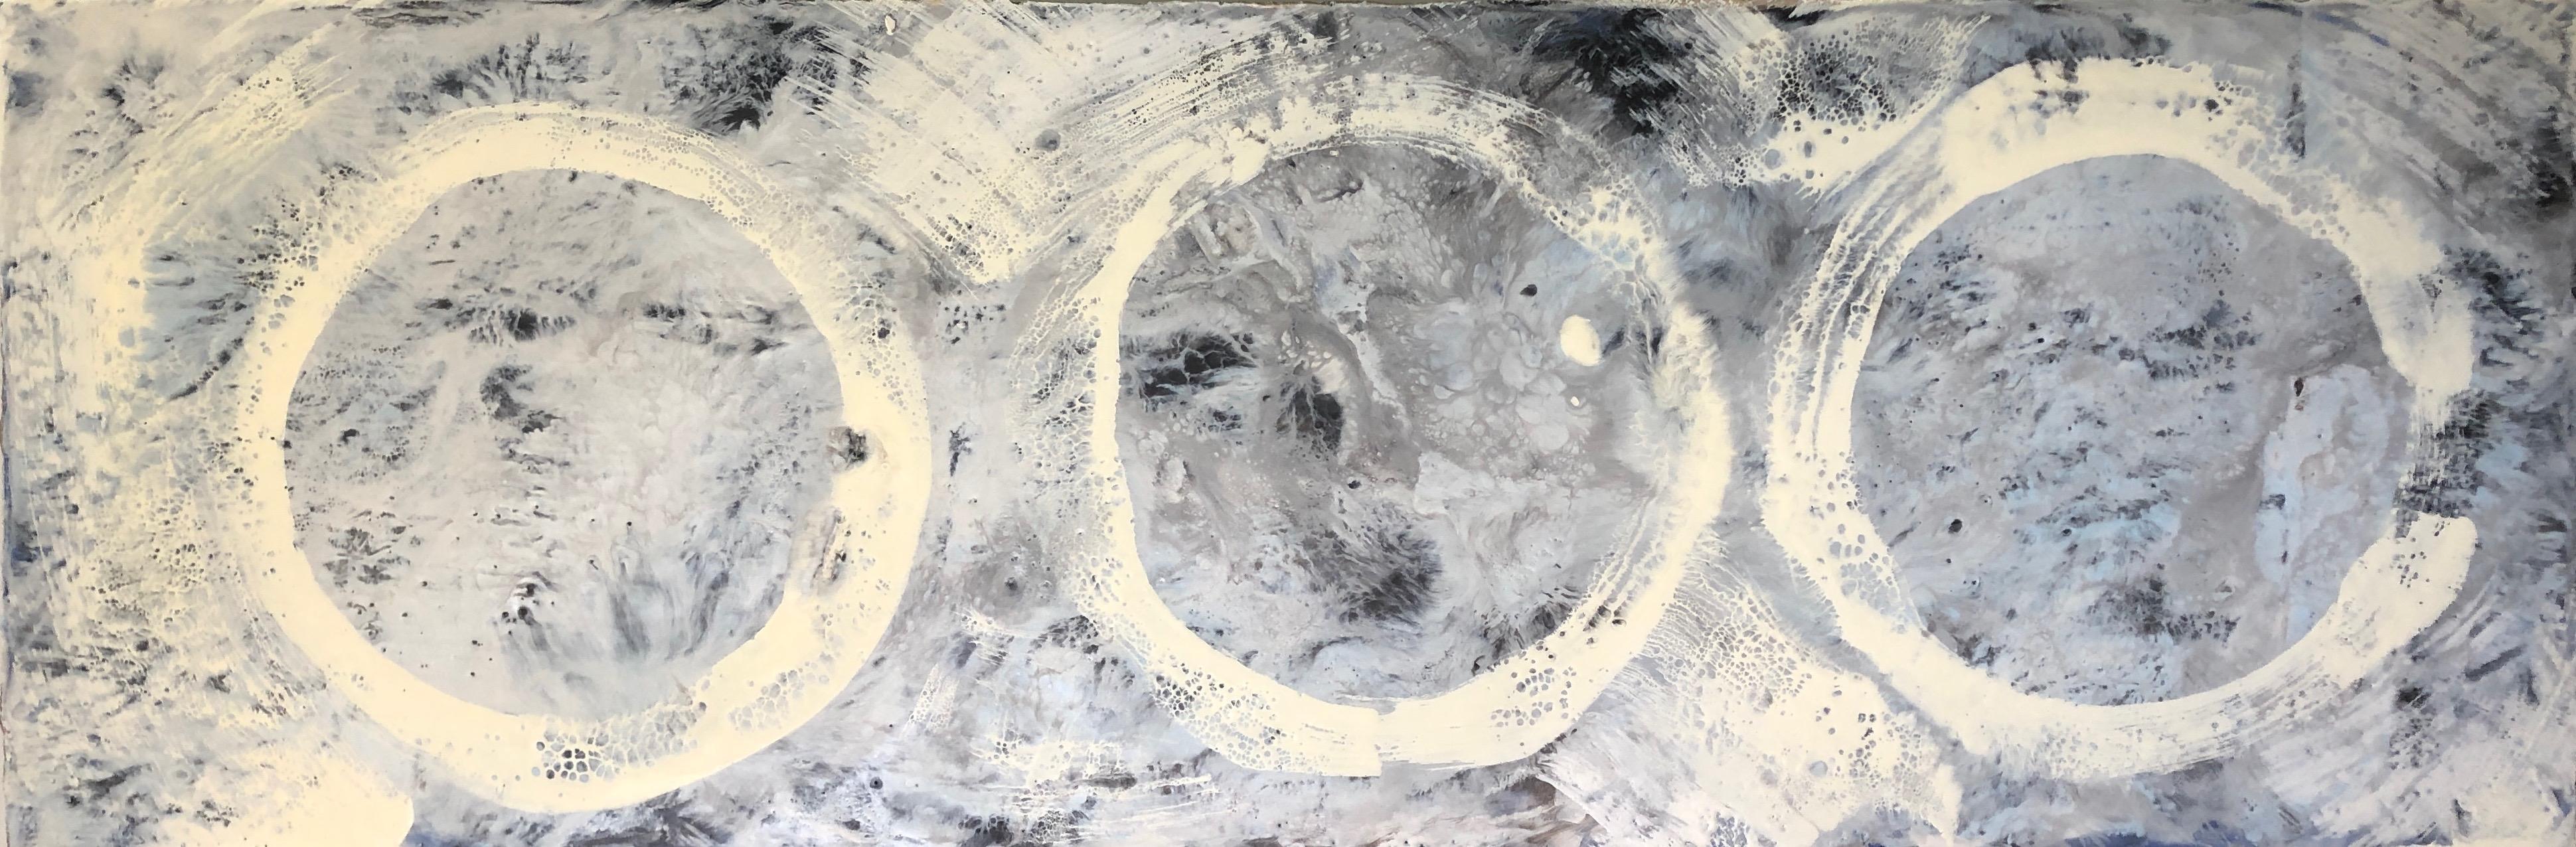 Andrea Bonfils - Triple Moon, peinture 2019